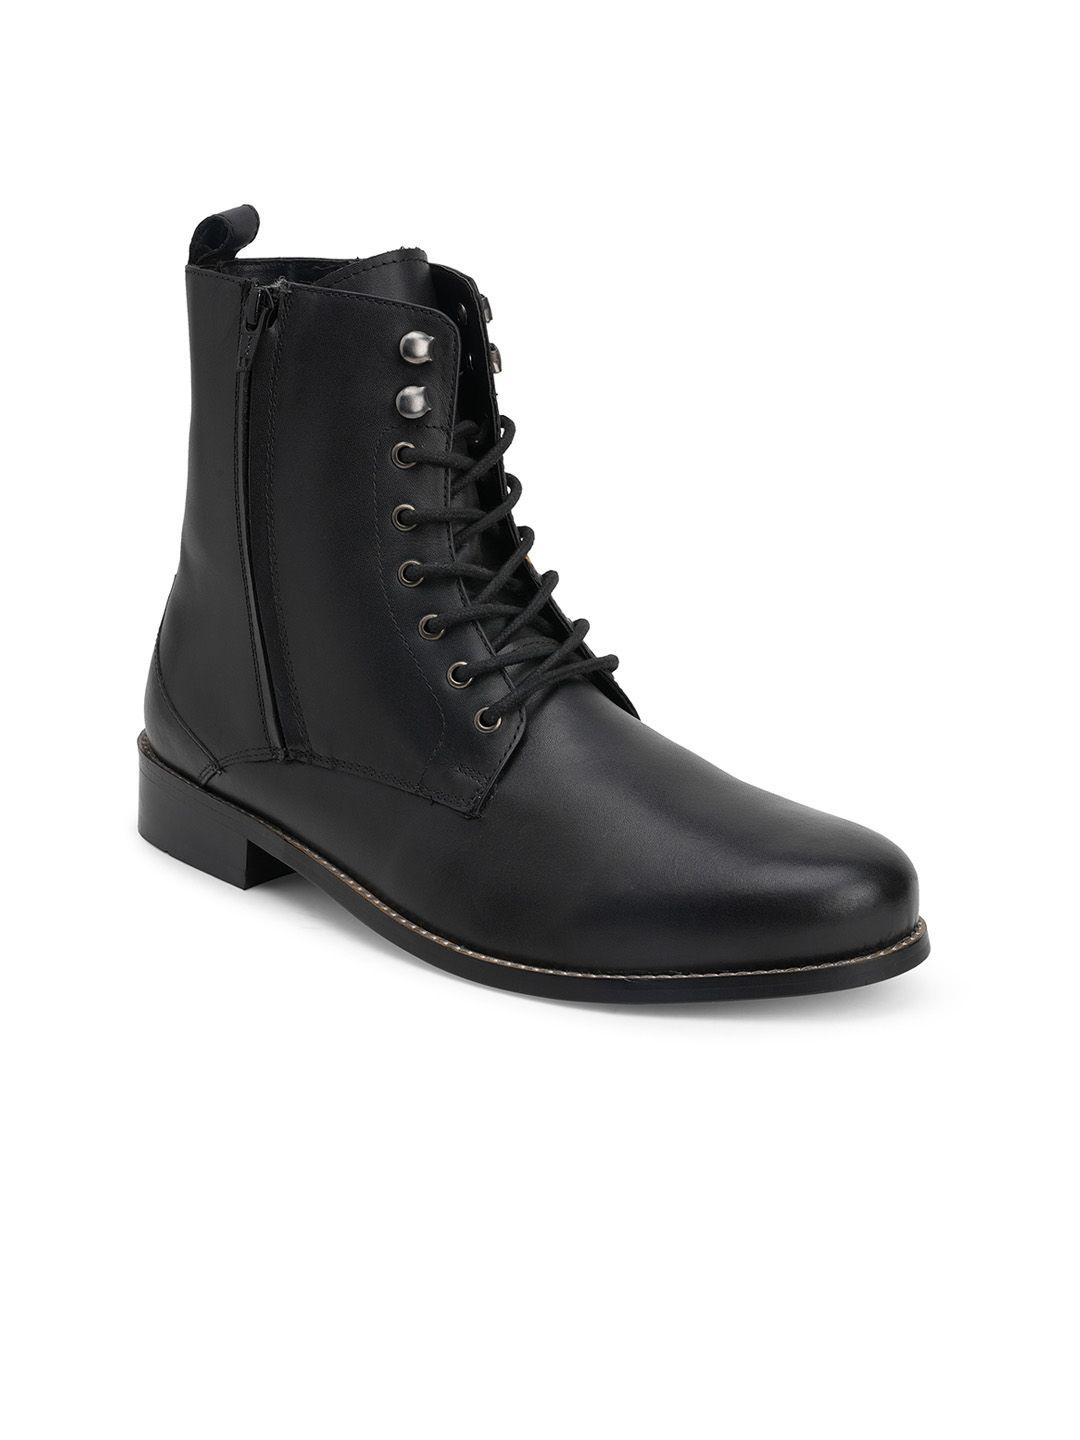 hats-off-accessories-men-mid-top-leather-regular-boots